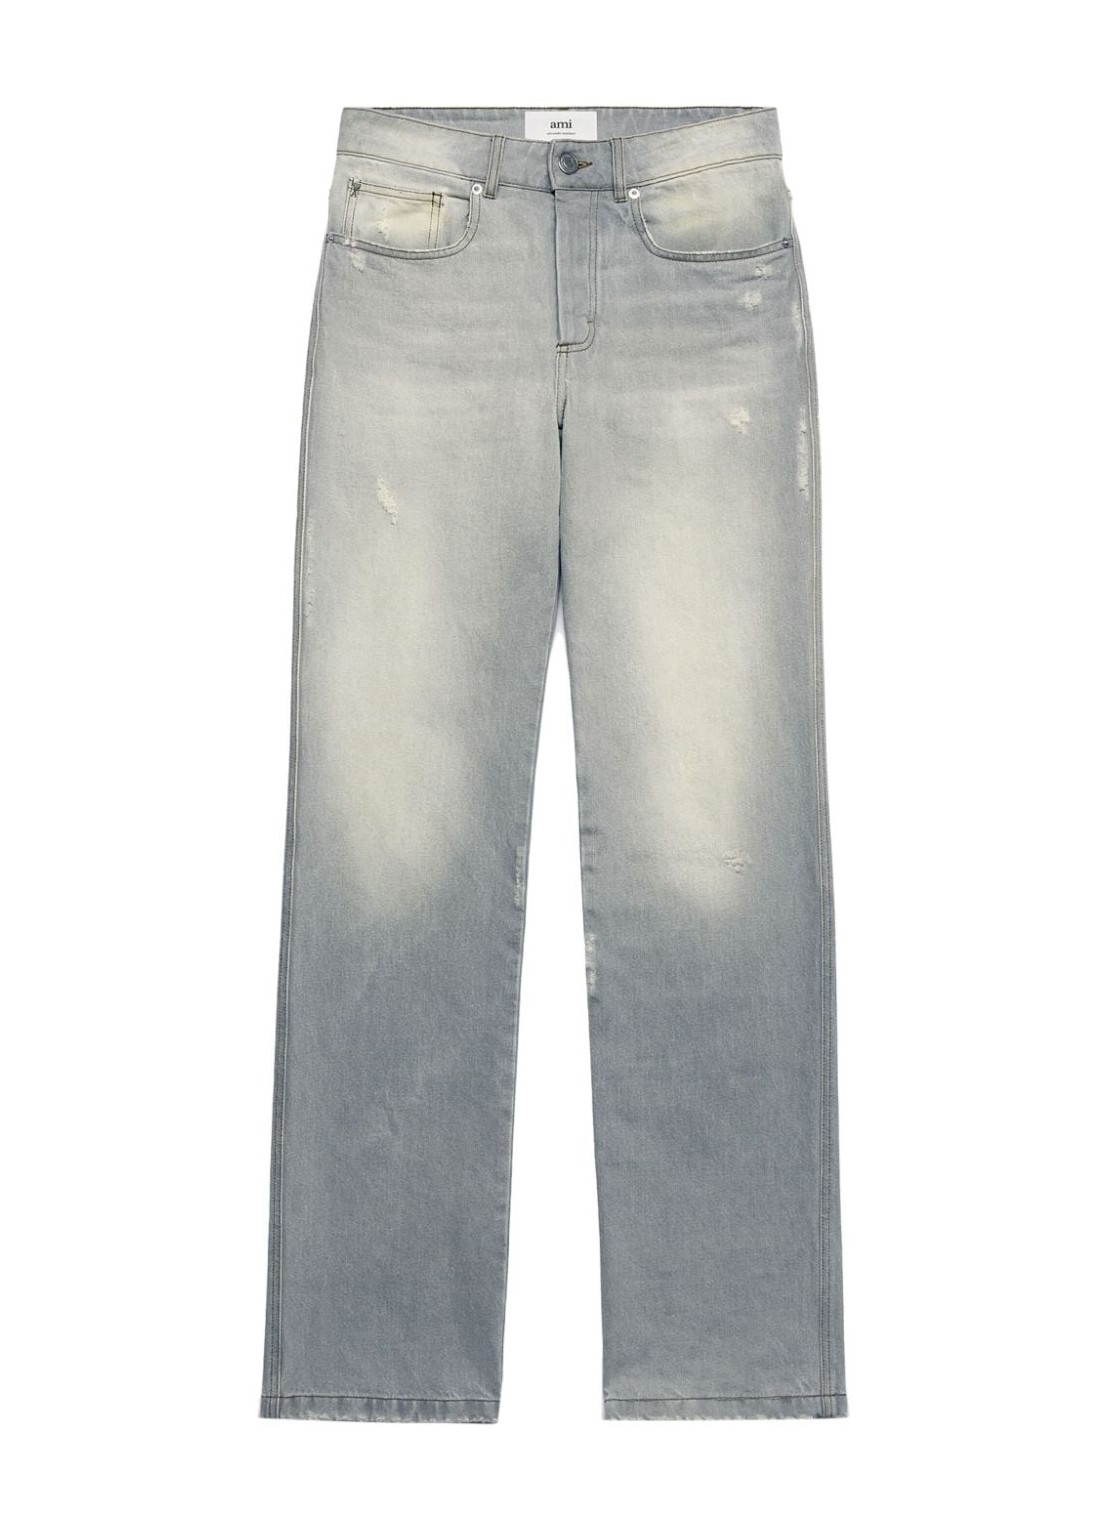 Pantalon jeans ami denim man straight fit jeans utr500de0019 0554 talla 32
 